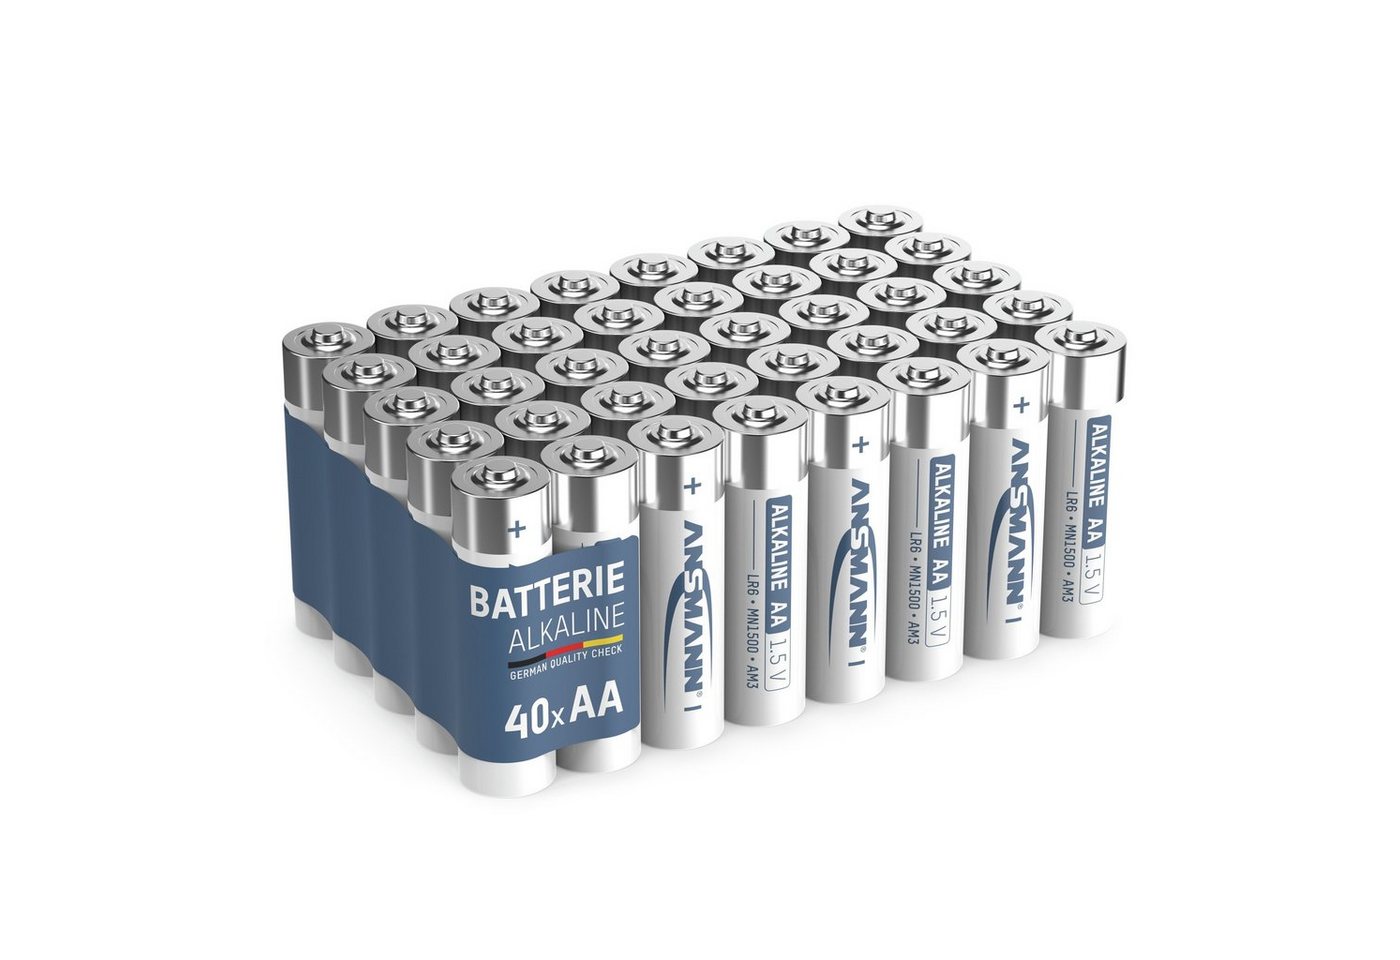 ANSMANN AG Batterien AA 40 Stück, Alkaline Mignon Batterie, für Lichterkette uvm. Batterie von ANSMANN AG